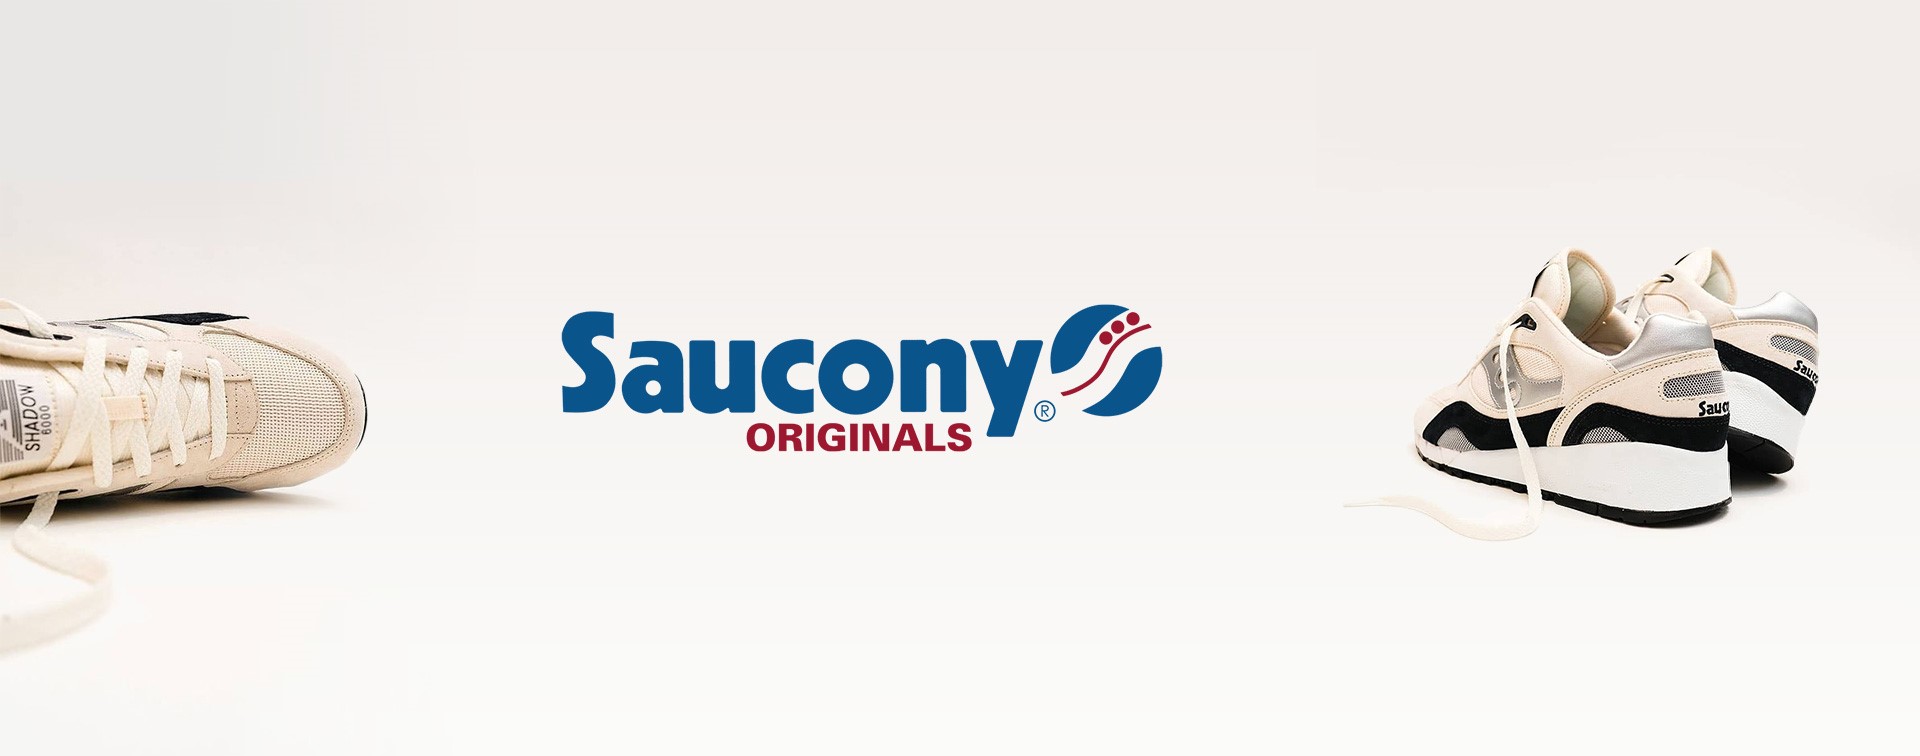 Saucony Originals